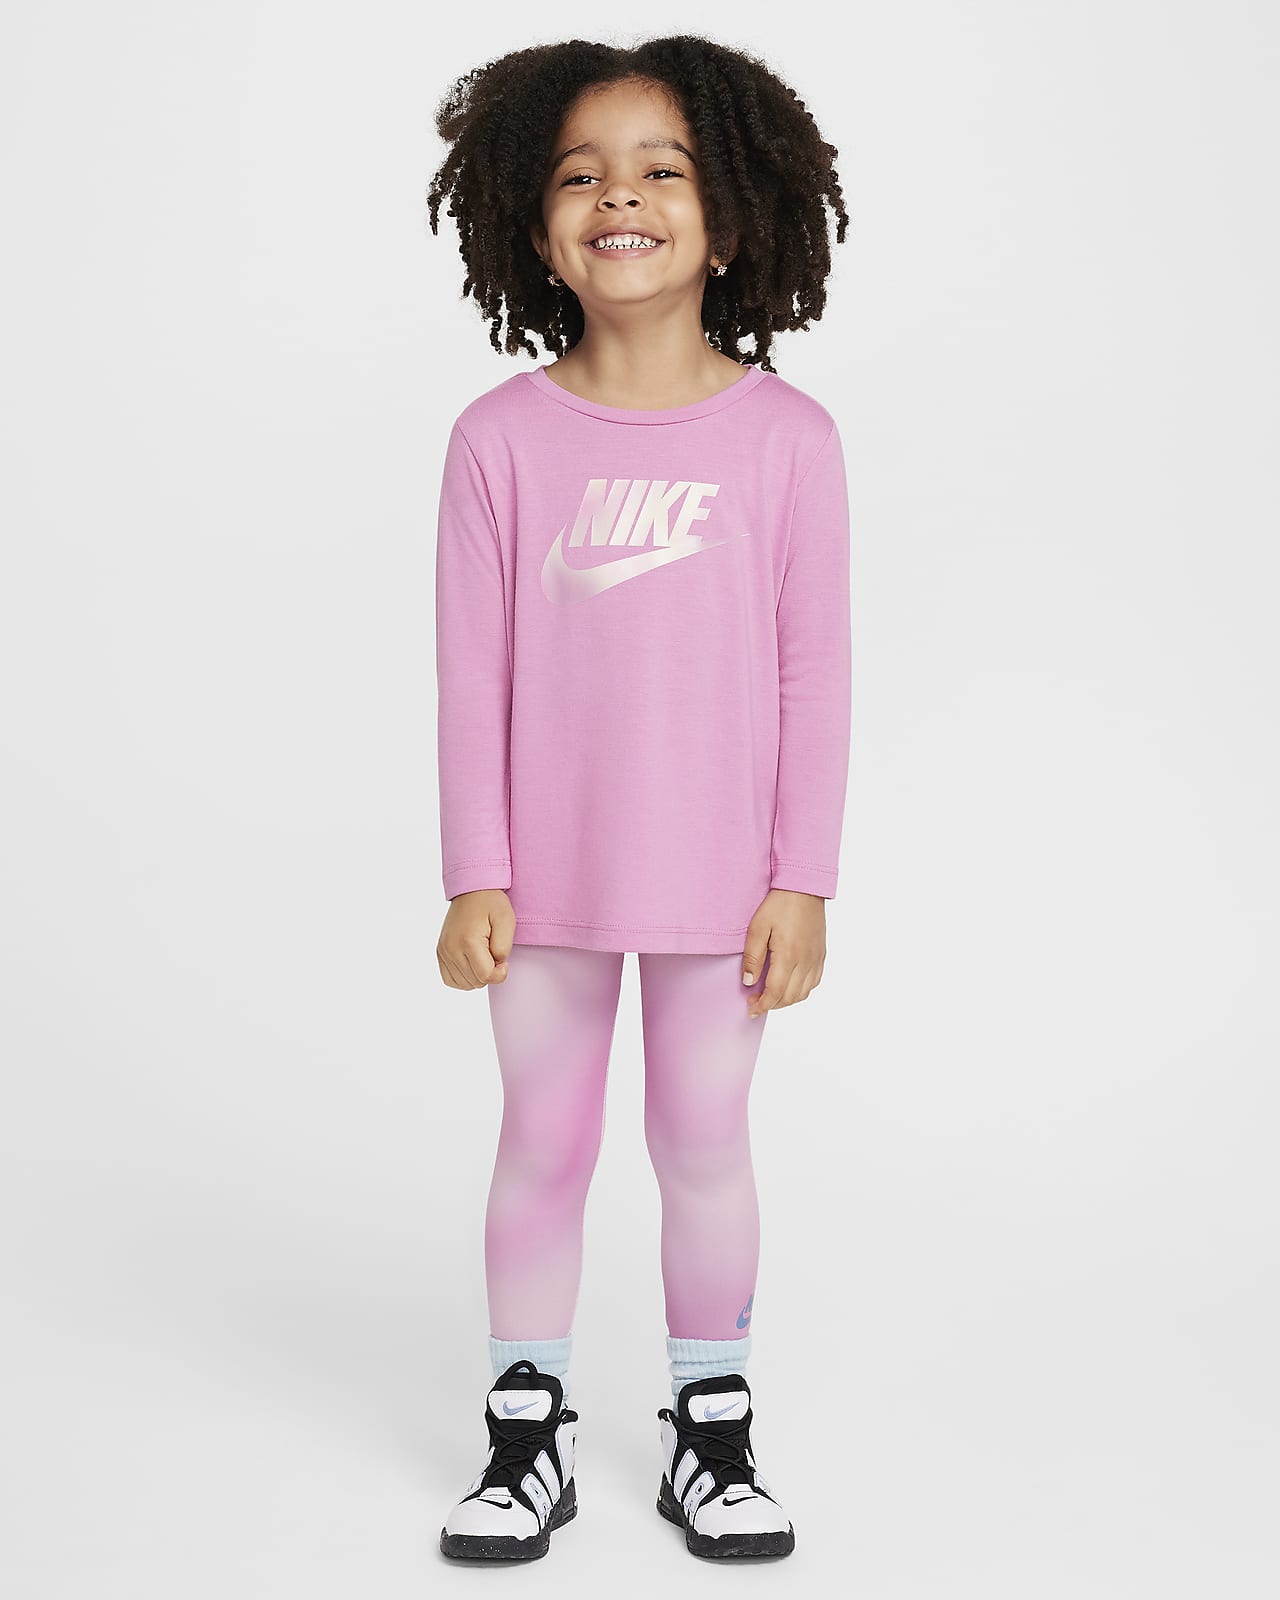 Nike Dri-FIT Toddler Long Sleeve T-Shirt and Leggings Set